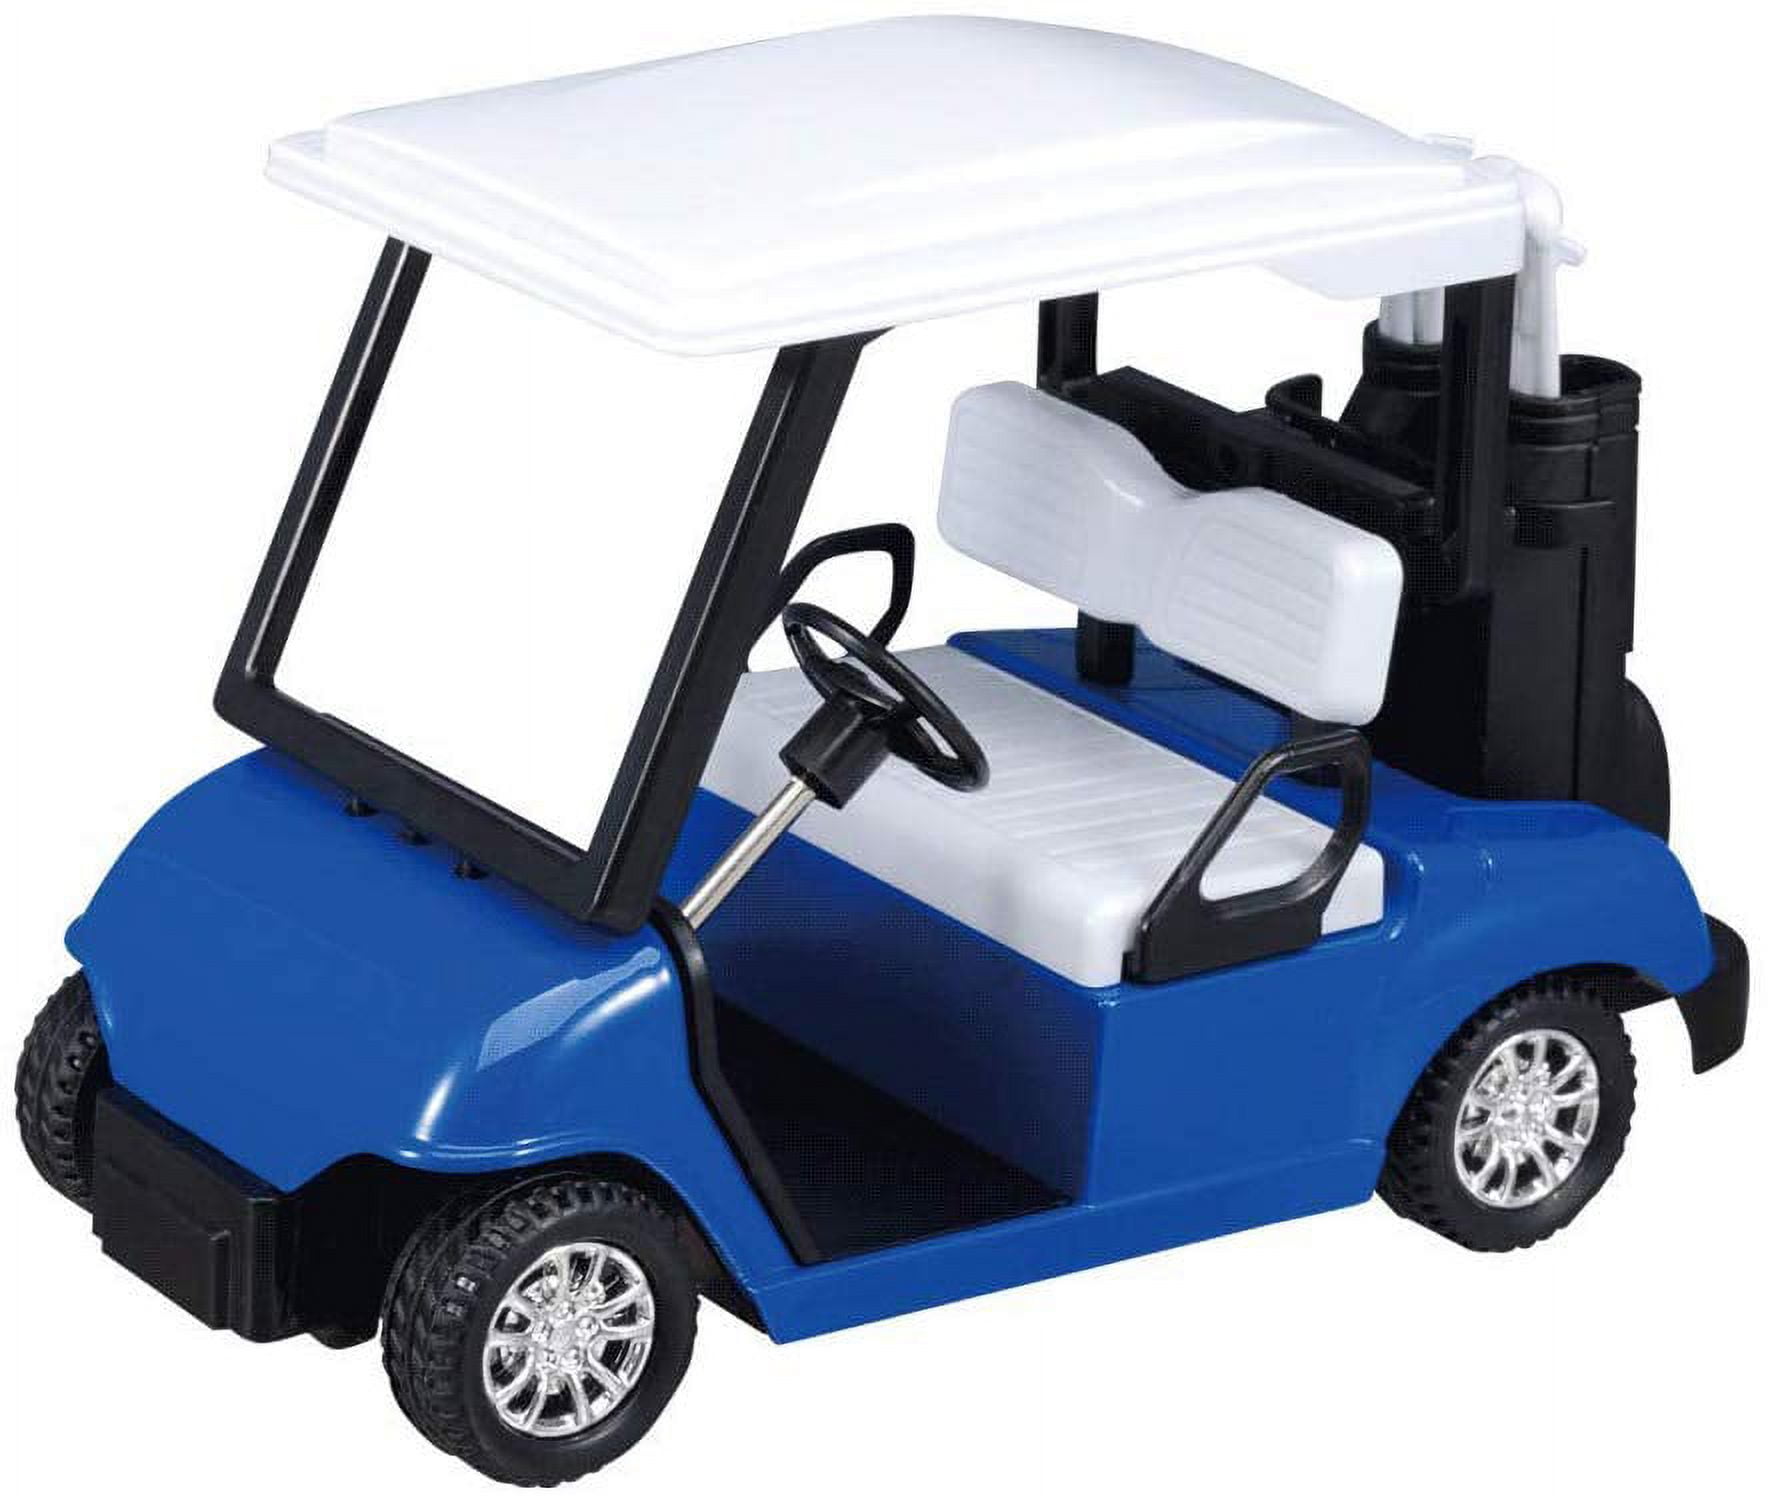 McMulligan's 4.5 Die-Cast Metal Golf Cart Toy 6pcs - Multicolor